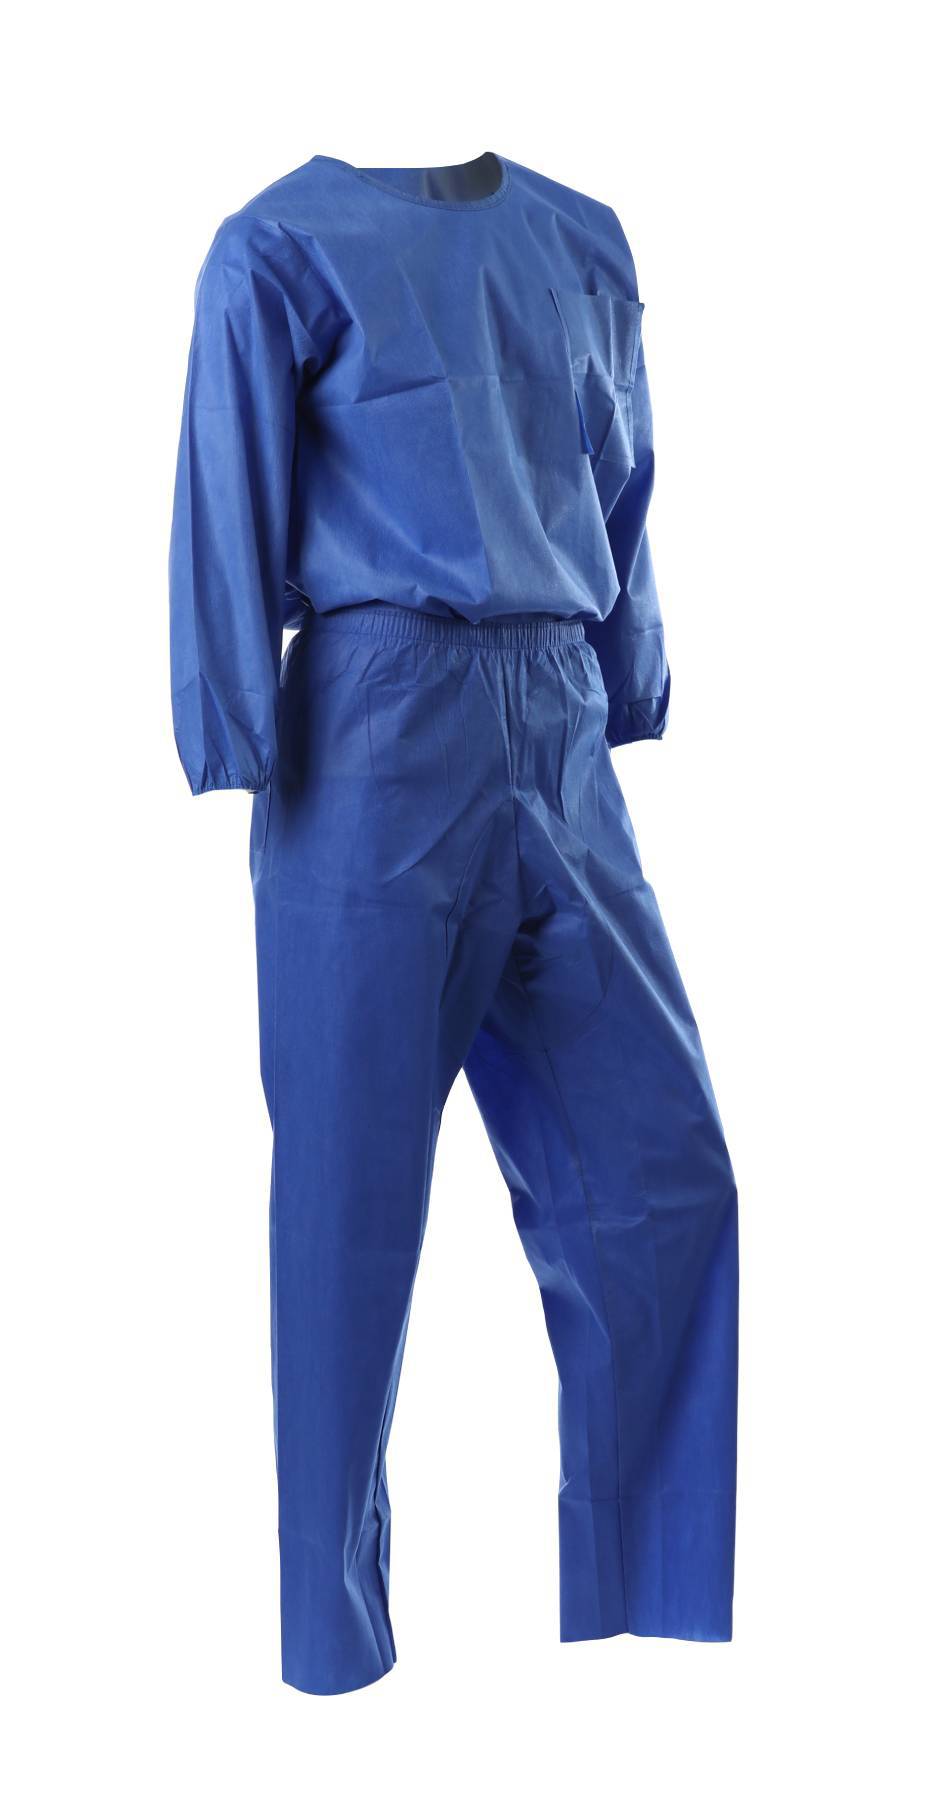 Blue Medium Halyard Health 69701 Scrub Shirt 3-Layer SMS Fabric Case of 48 